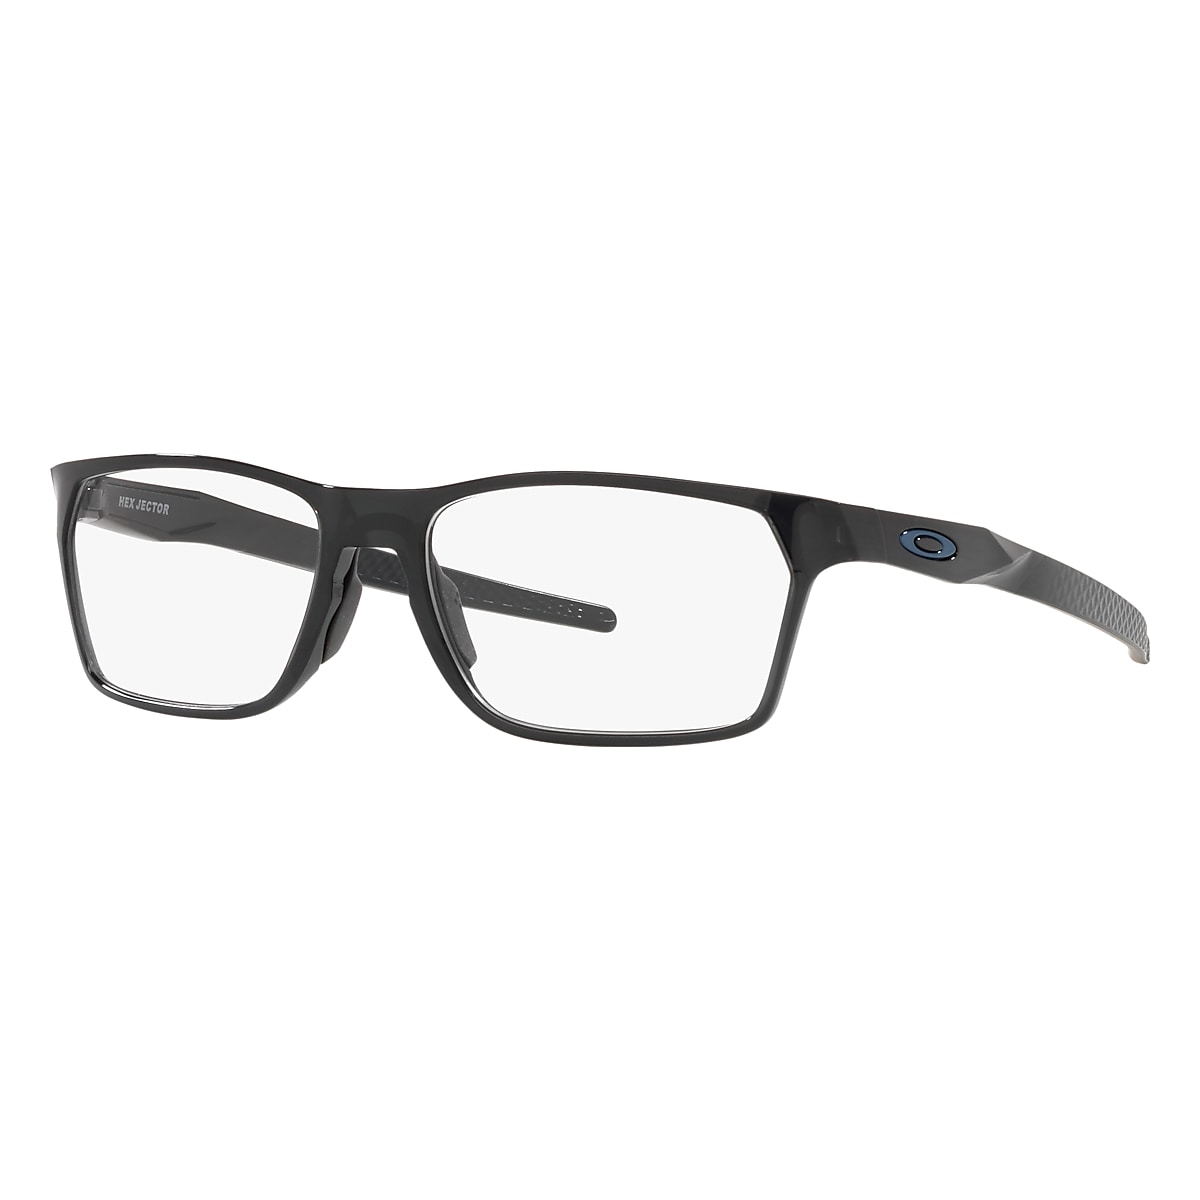 Ohio Glasses's Code & Price - RblxTrade